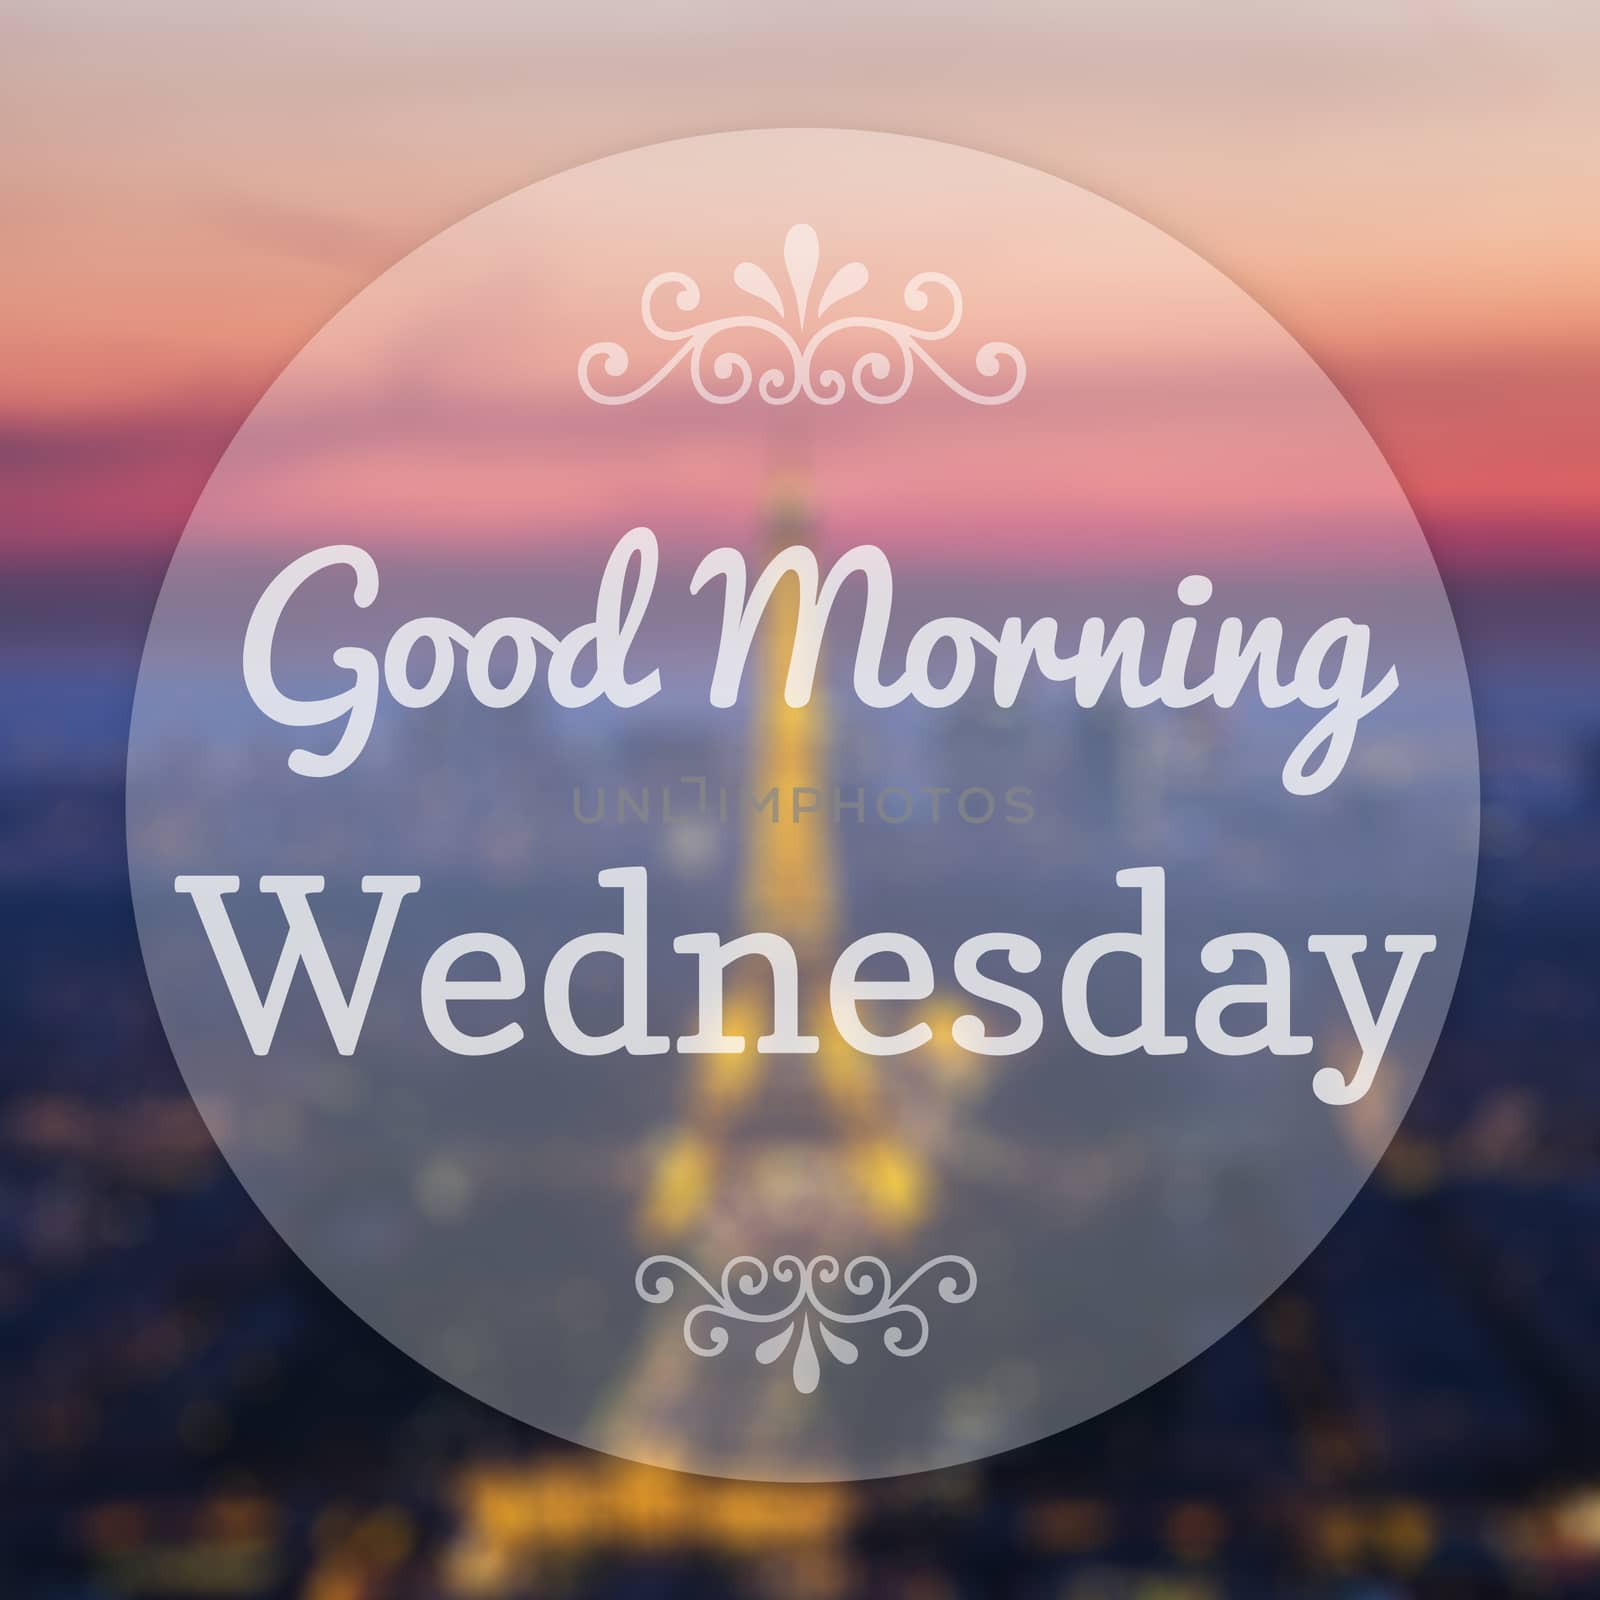 Good Morning Wednesday on Eiffle Paris blur background by 2nix